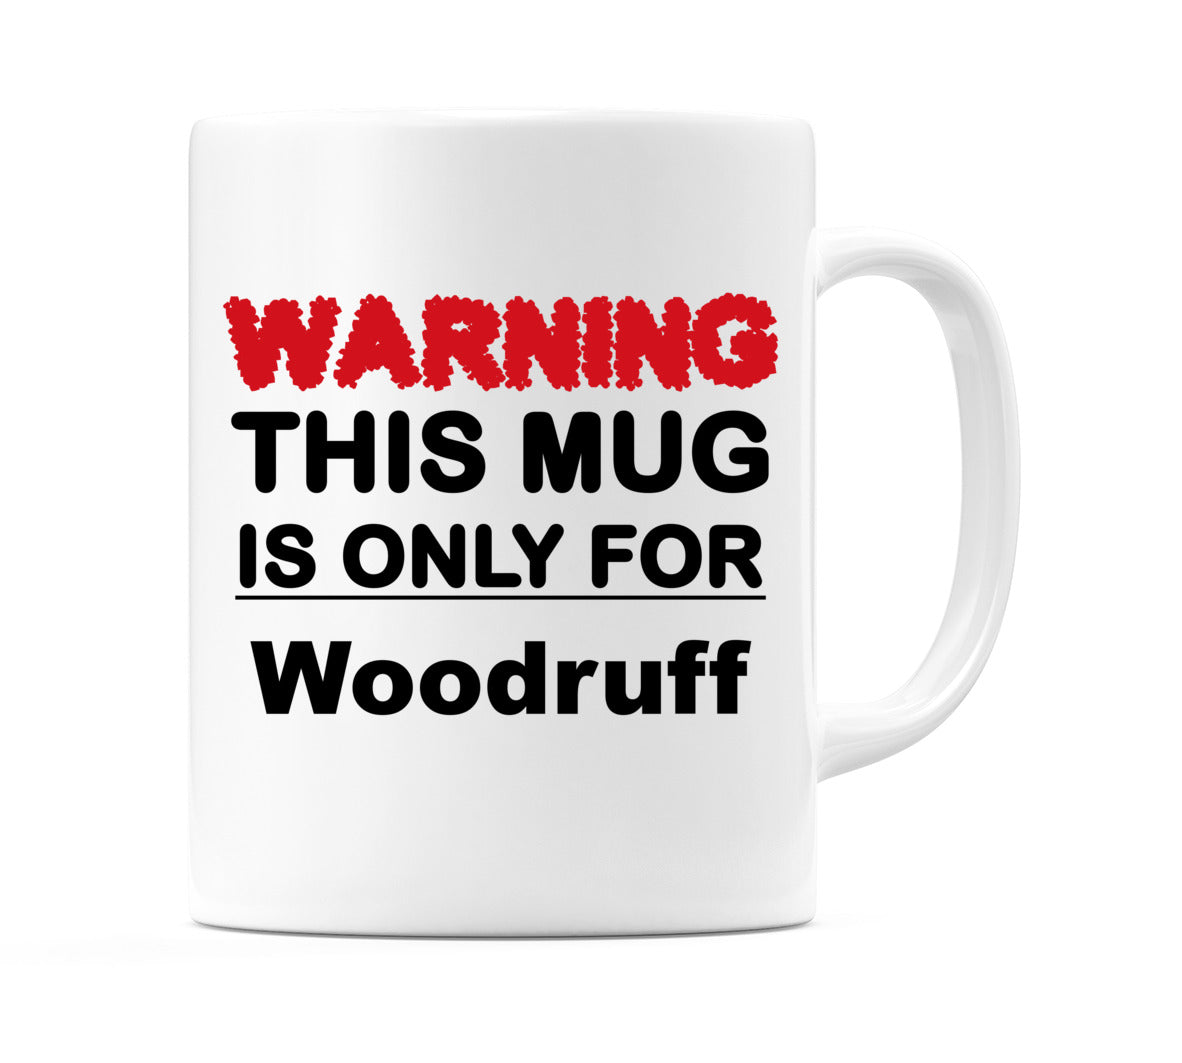 Warning This Mug is ONLY for Woodruff Mug